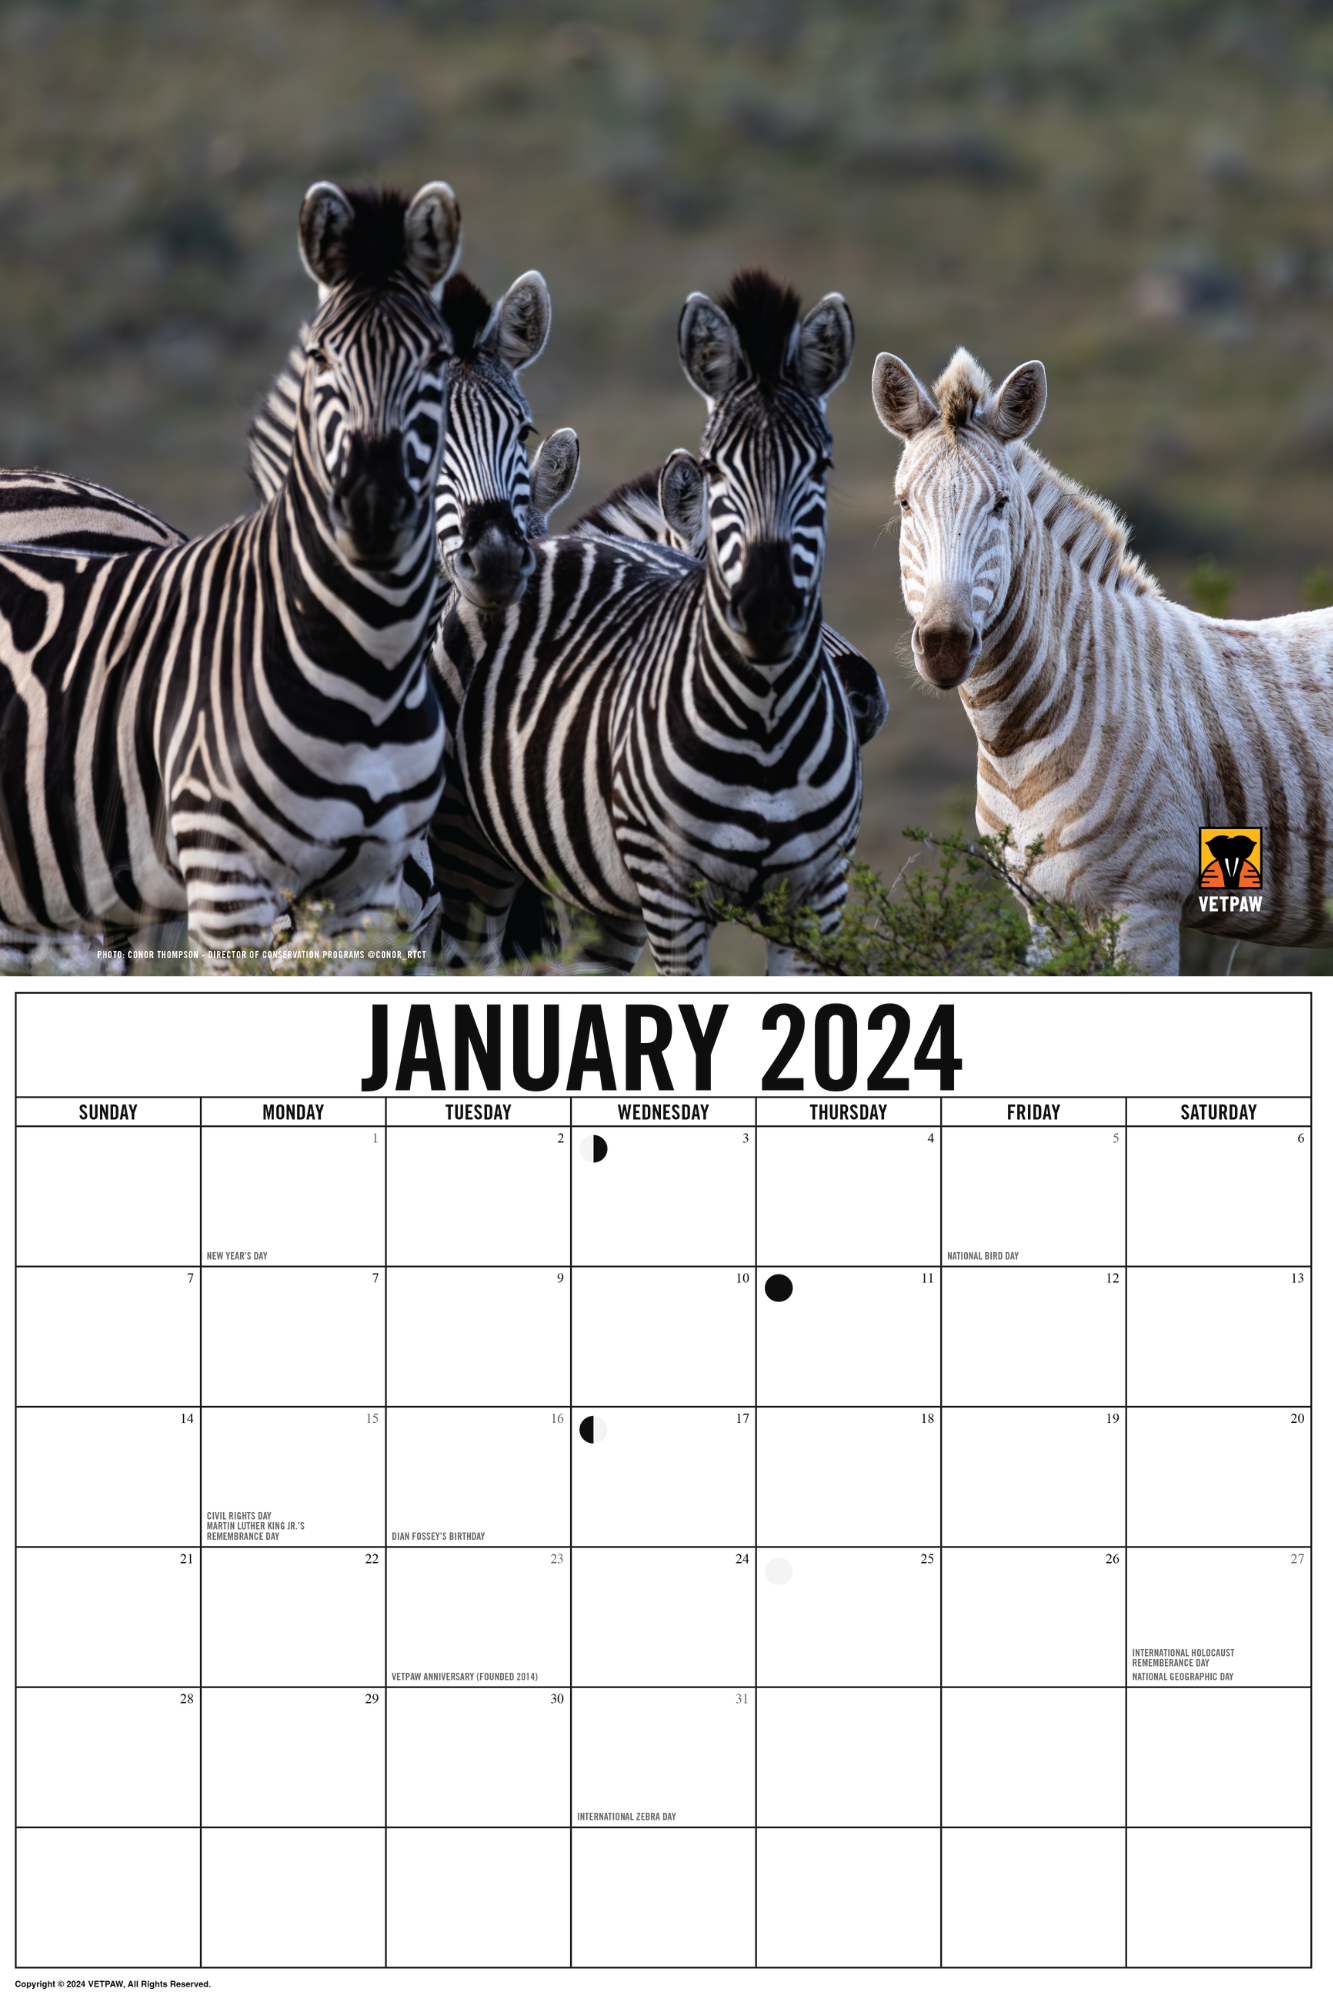 VETPAW Calendar 2024